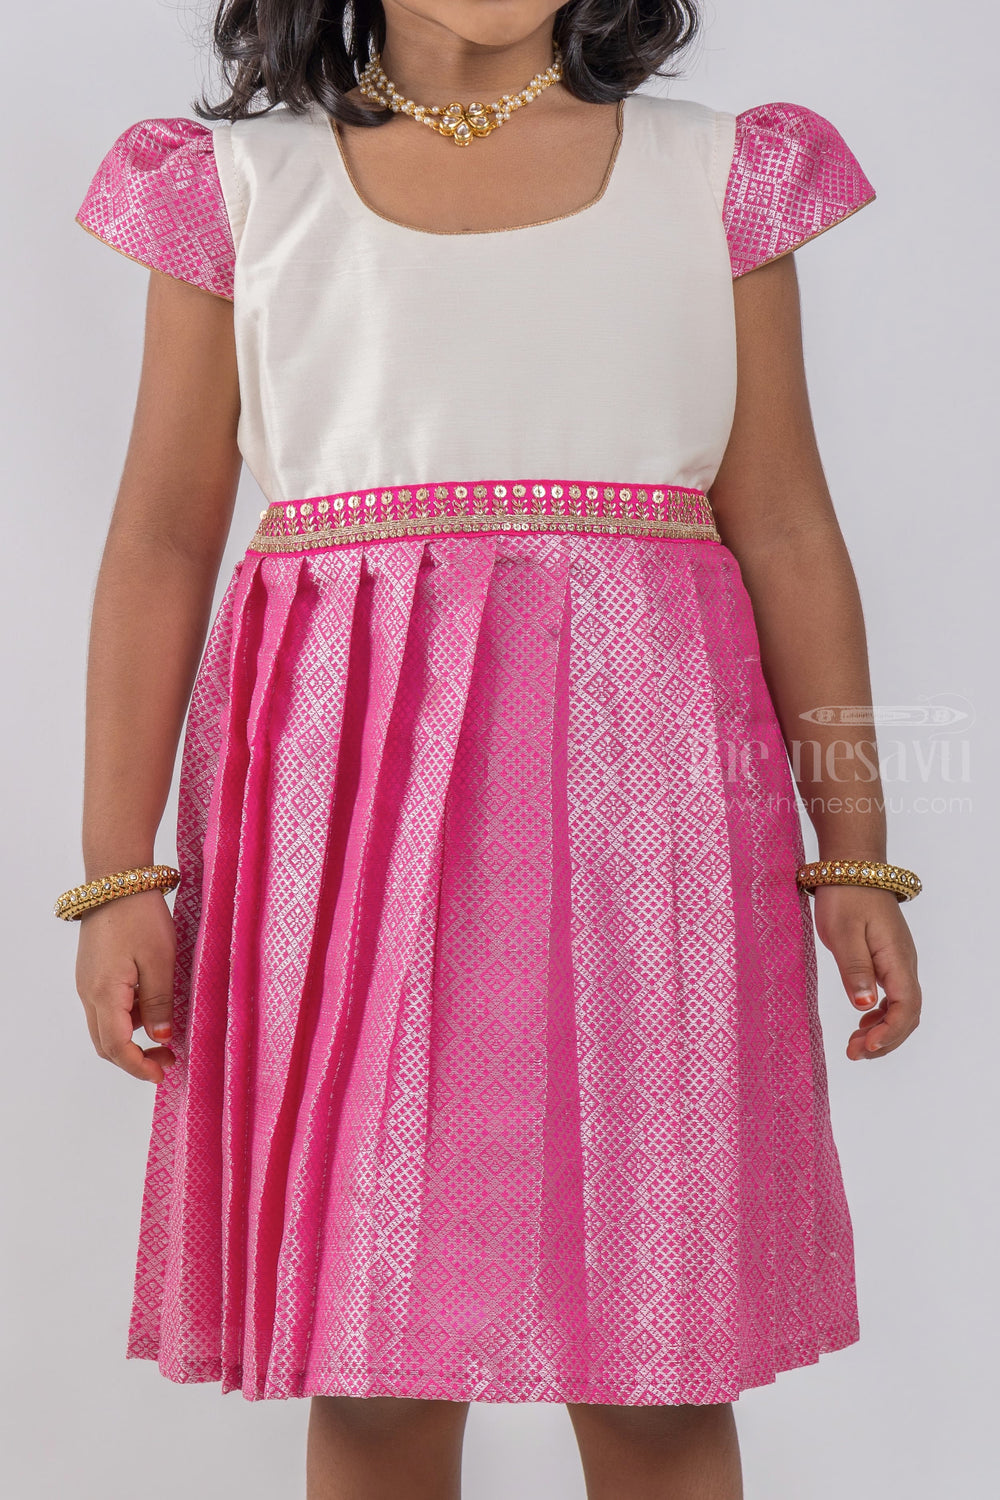 The Nesavu Silk Embroidered Frock Geometrical Designer Pink Classic Reshme Dress for Girls psr silks Nesavu